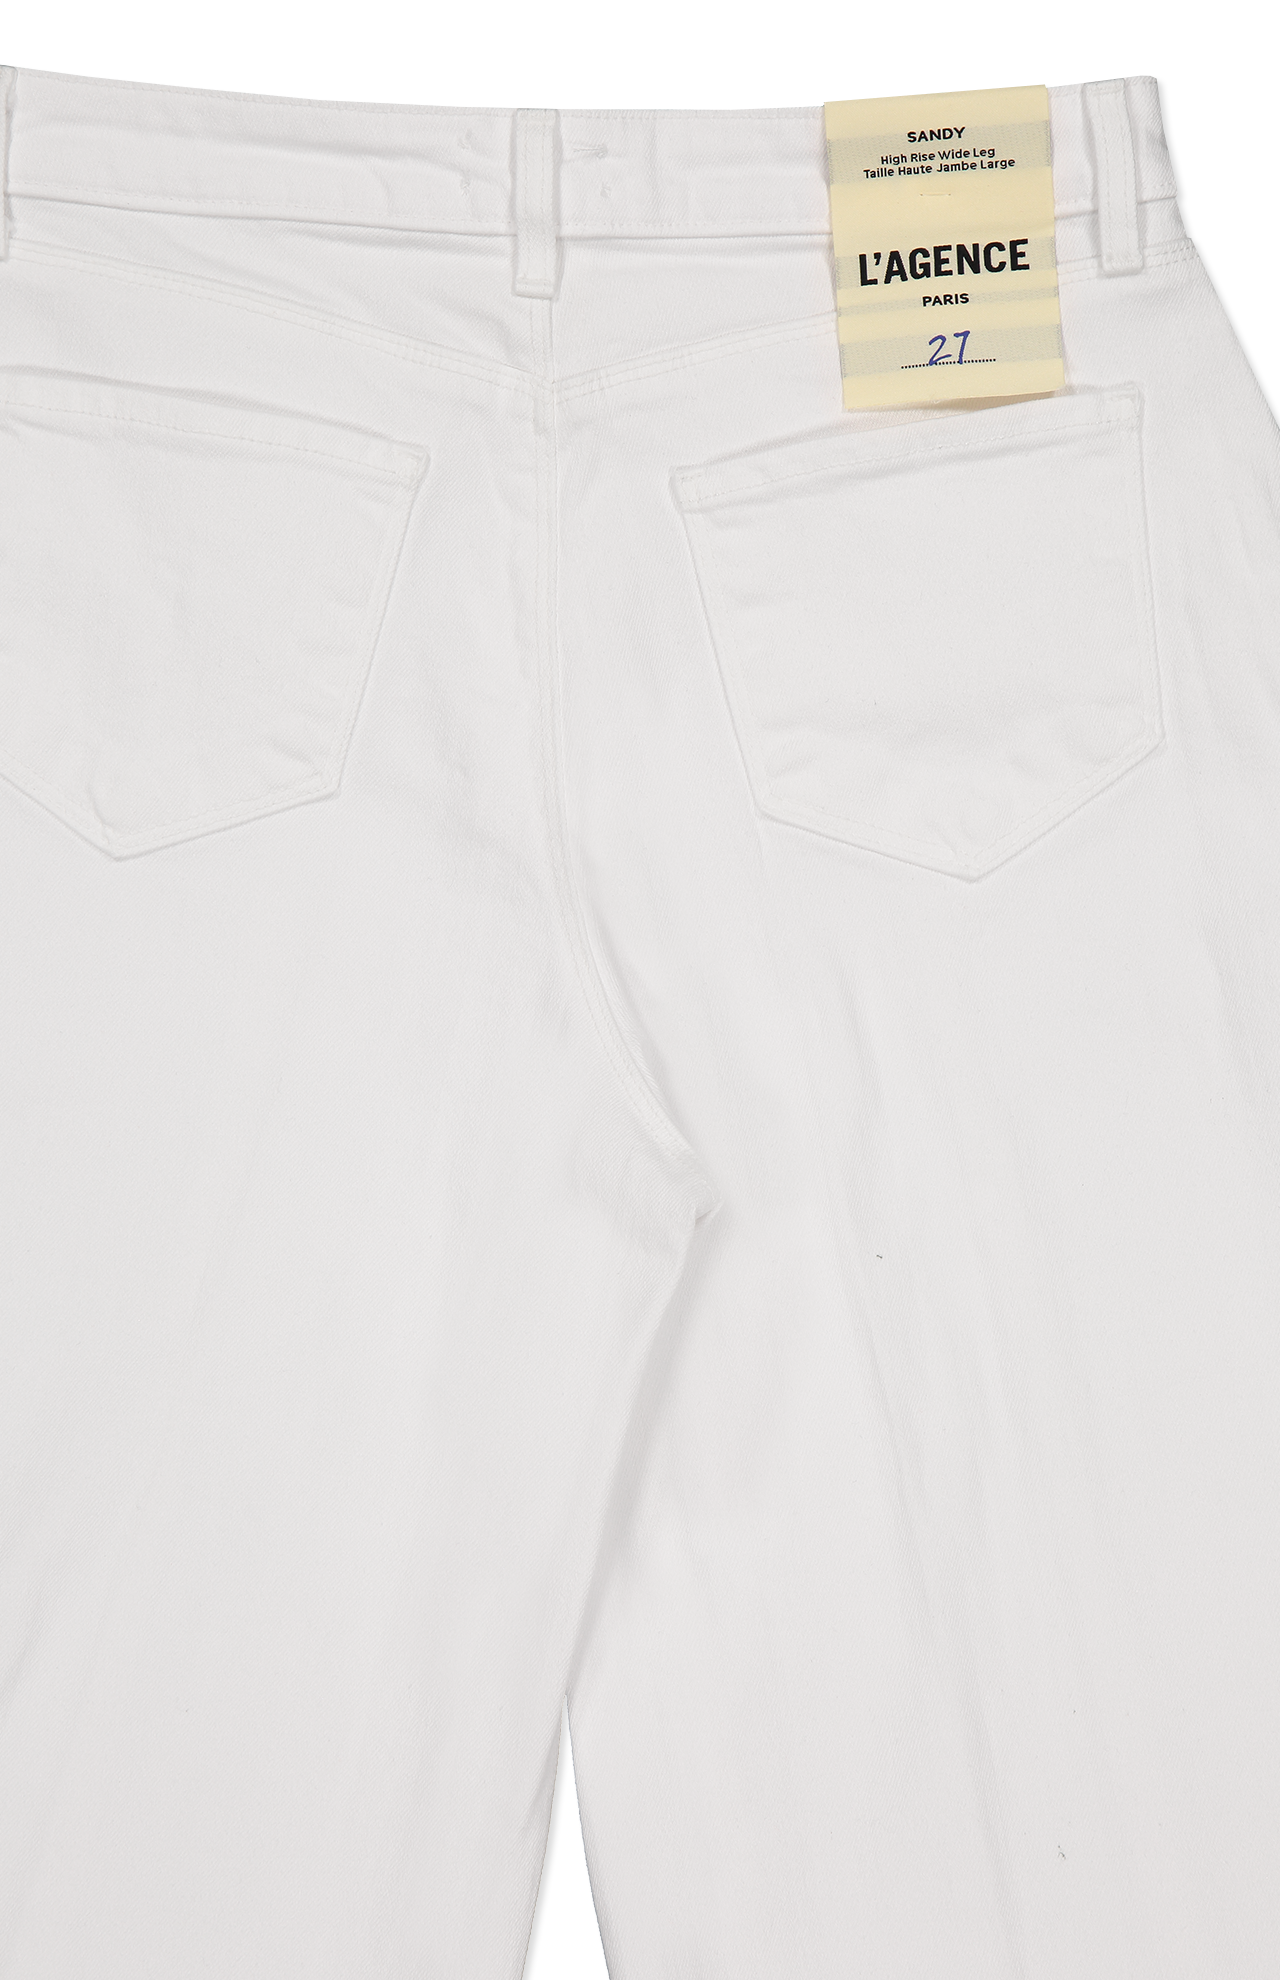 Lagence Sandy H/R Wide Leg Jeans White Back Pocket Detail Image  (6941051158643)